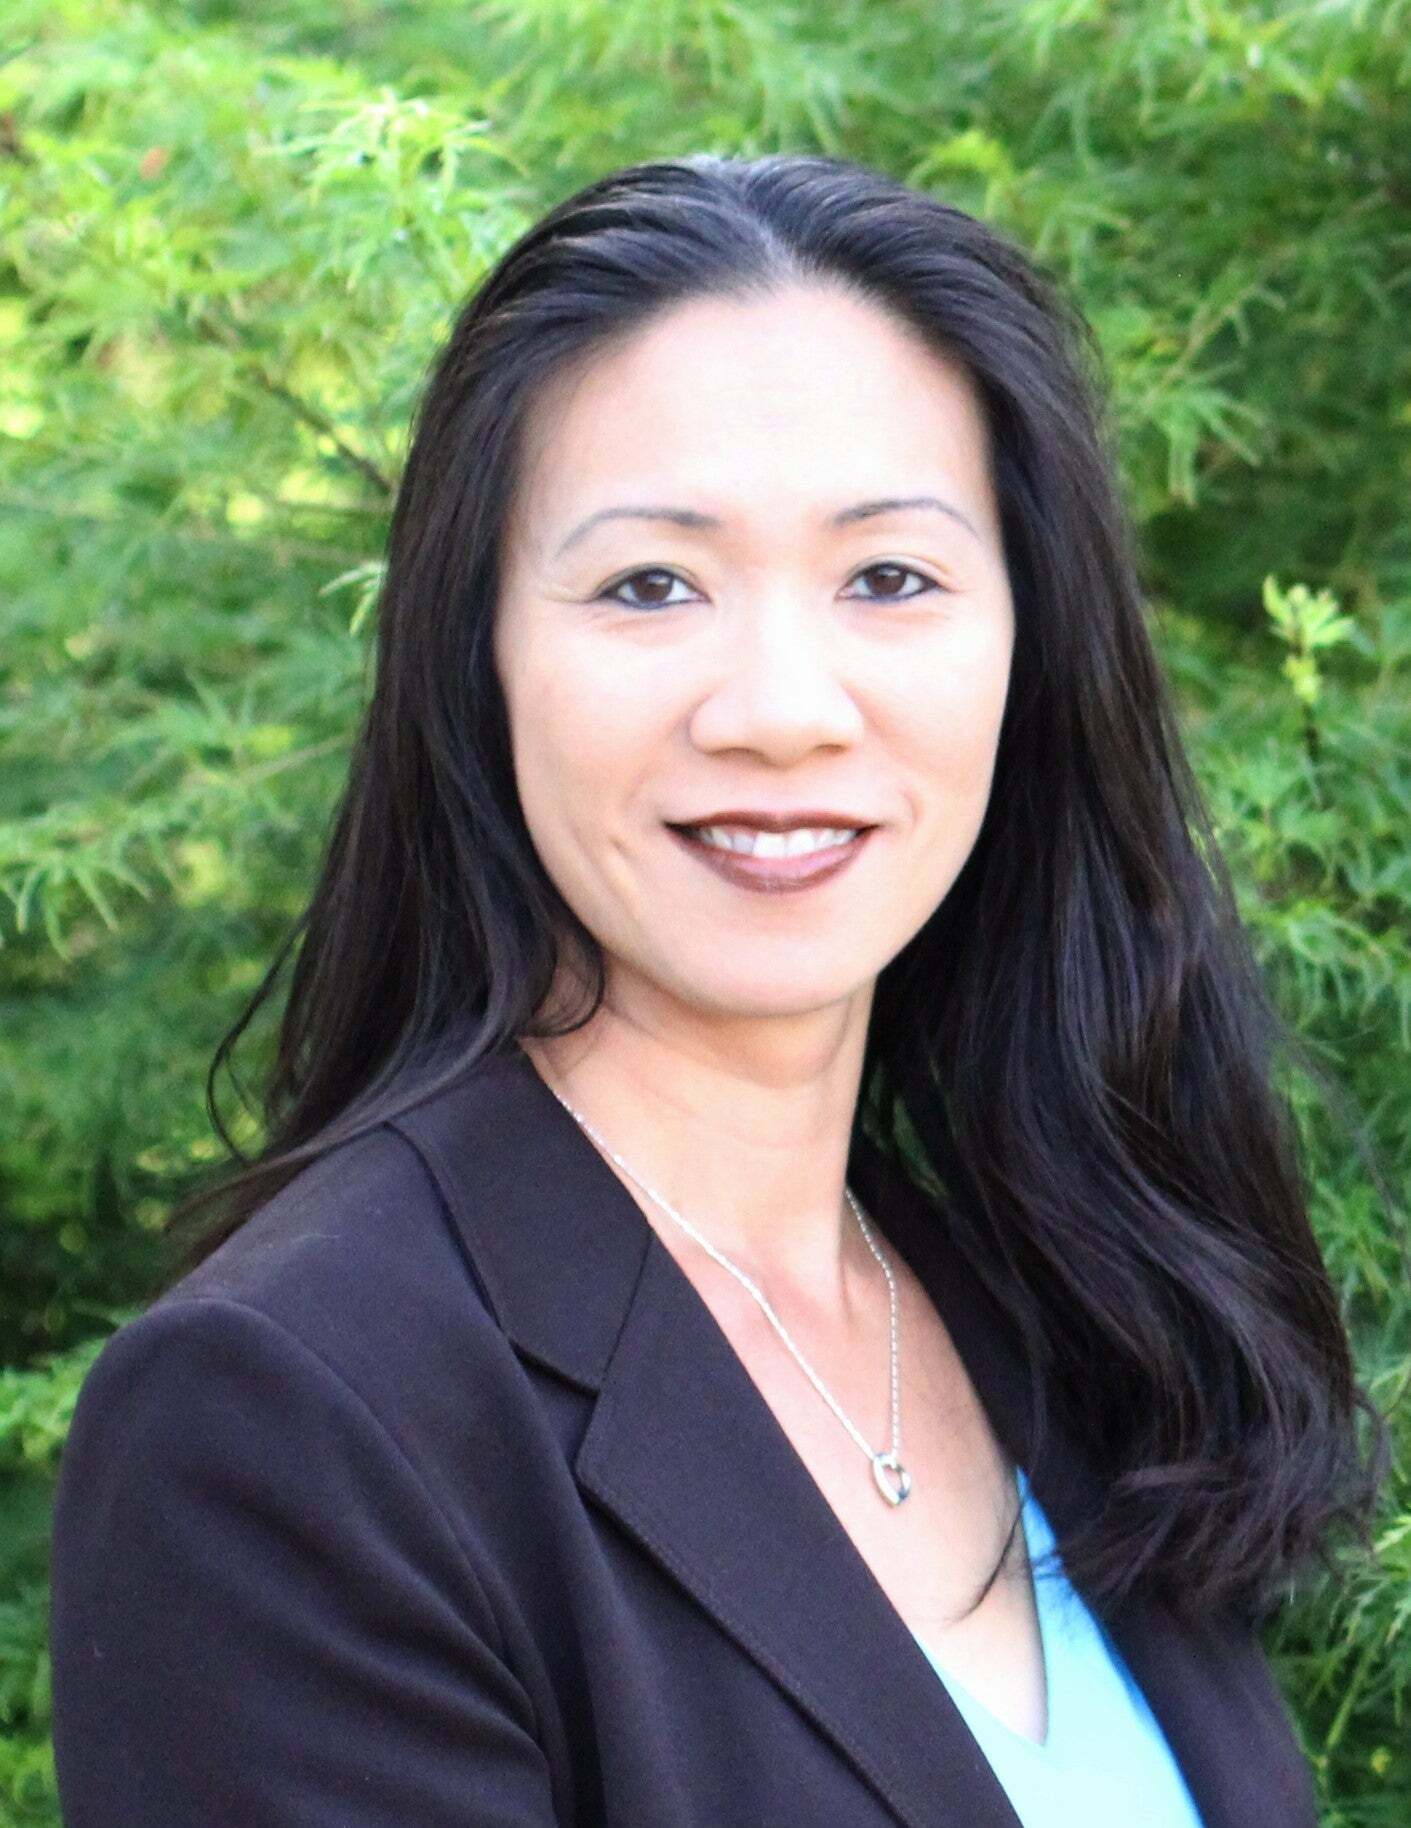 Martha Park, Real Estate Salesperson in Berkeley, Reliance Partners